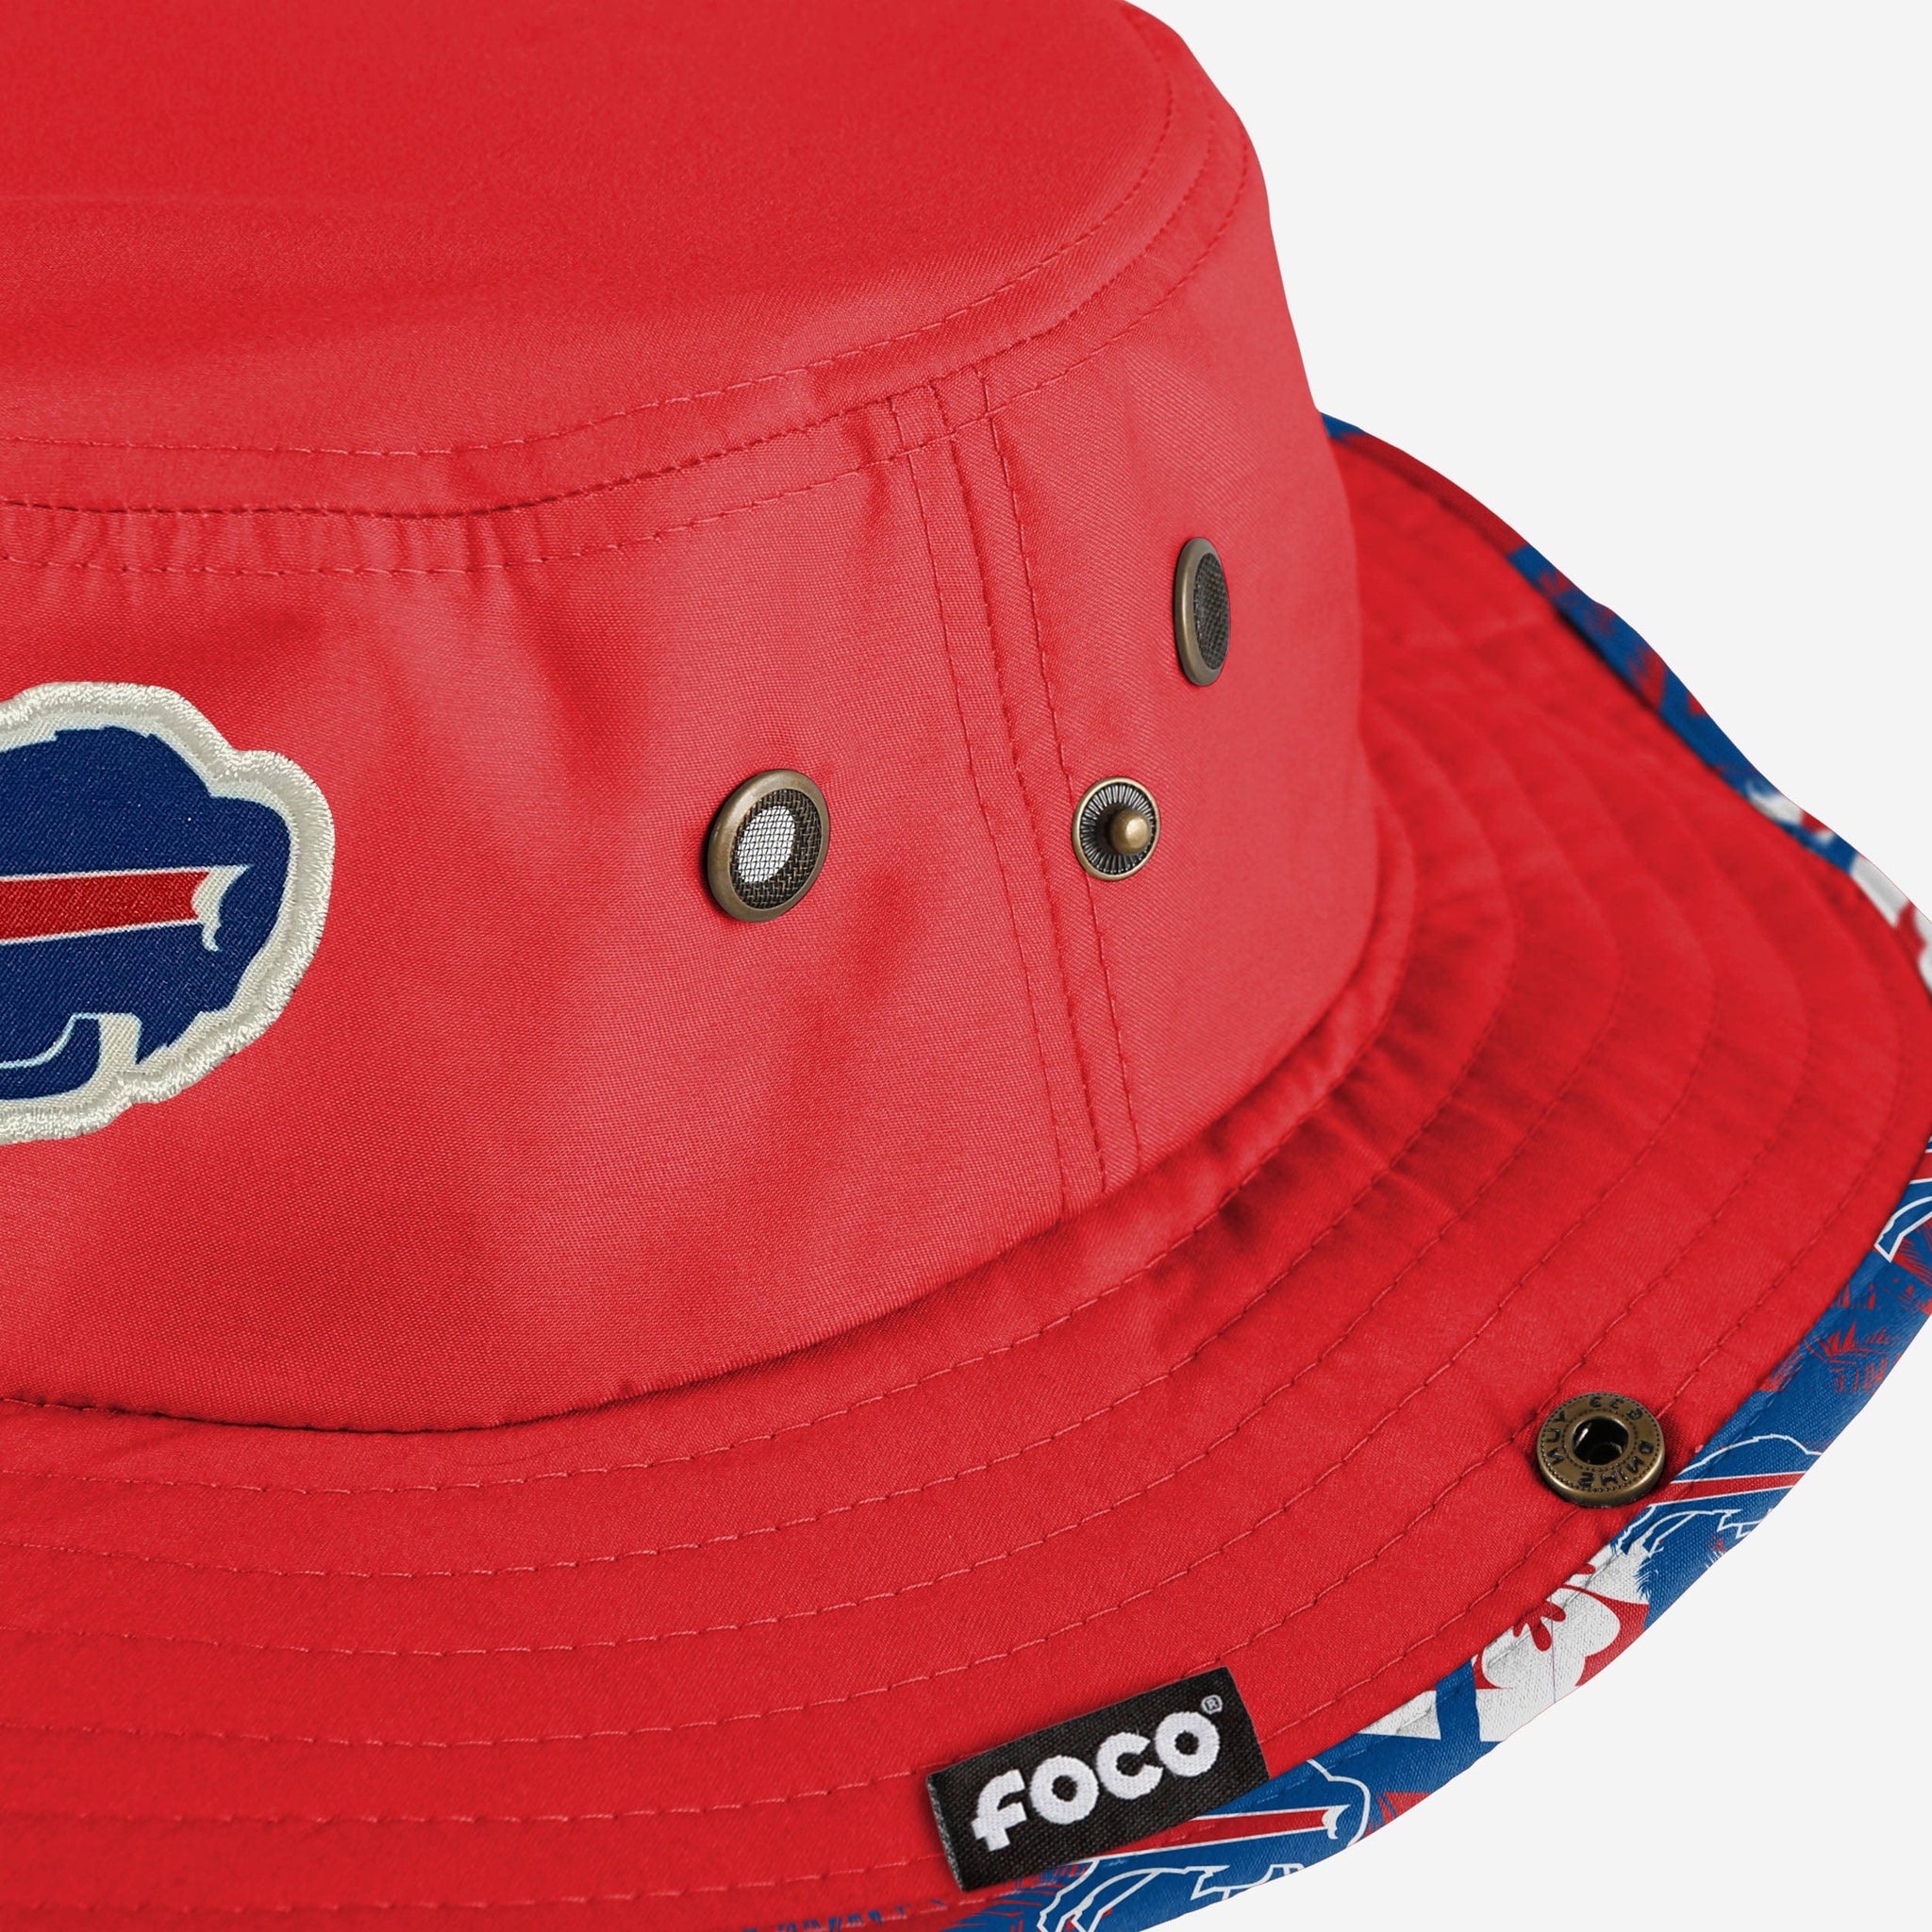 Philadelphia Eagles Kelly Green Solid Boonie Hat FOCO